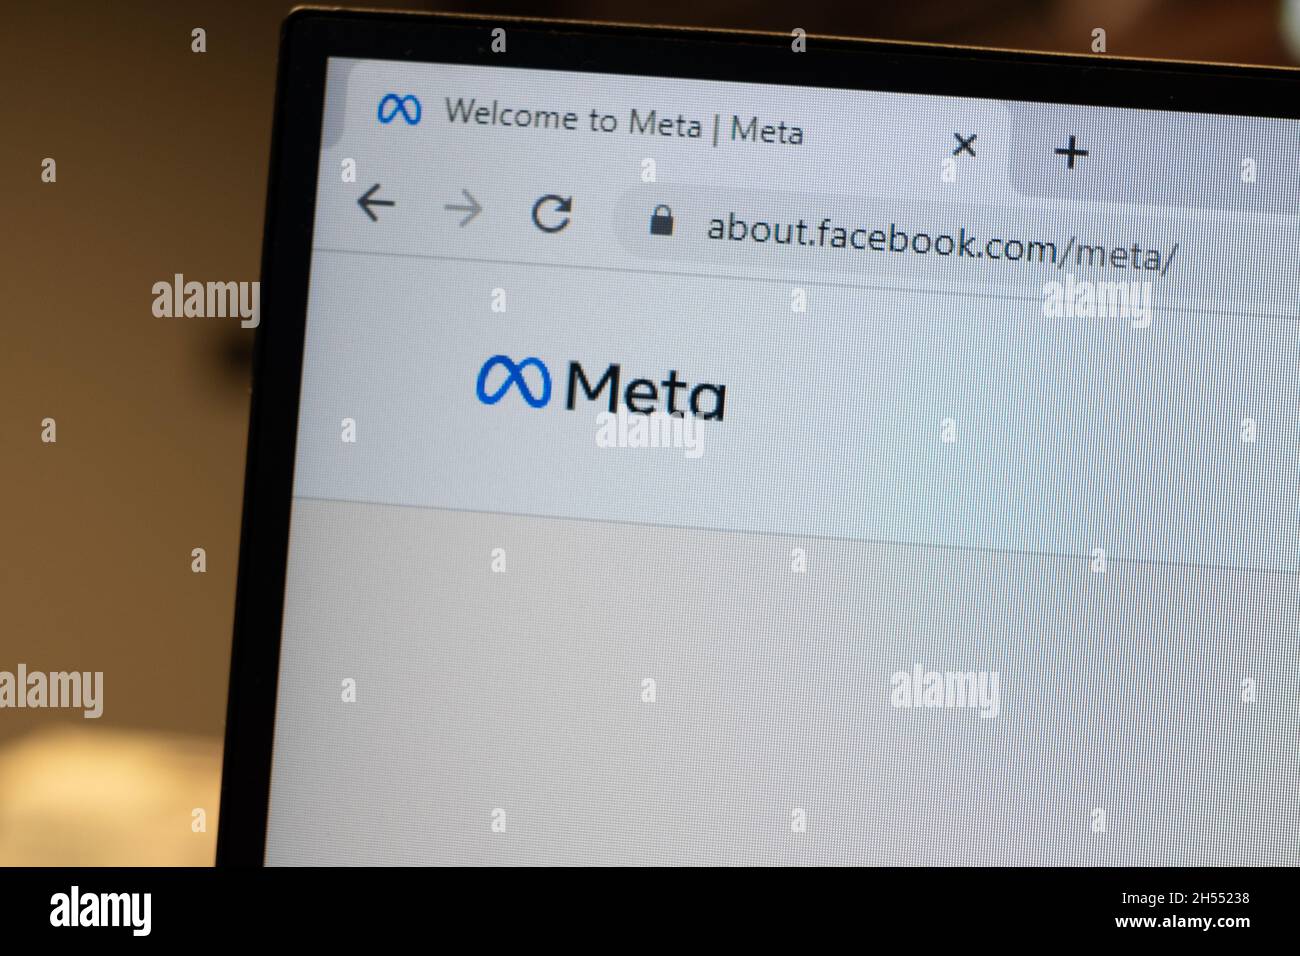 Estonia - Nov 2, 2021: Facebook changes its name to Meta. Facebook web address now displays Meta logo. Stock Photo